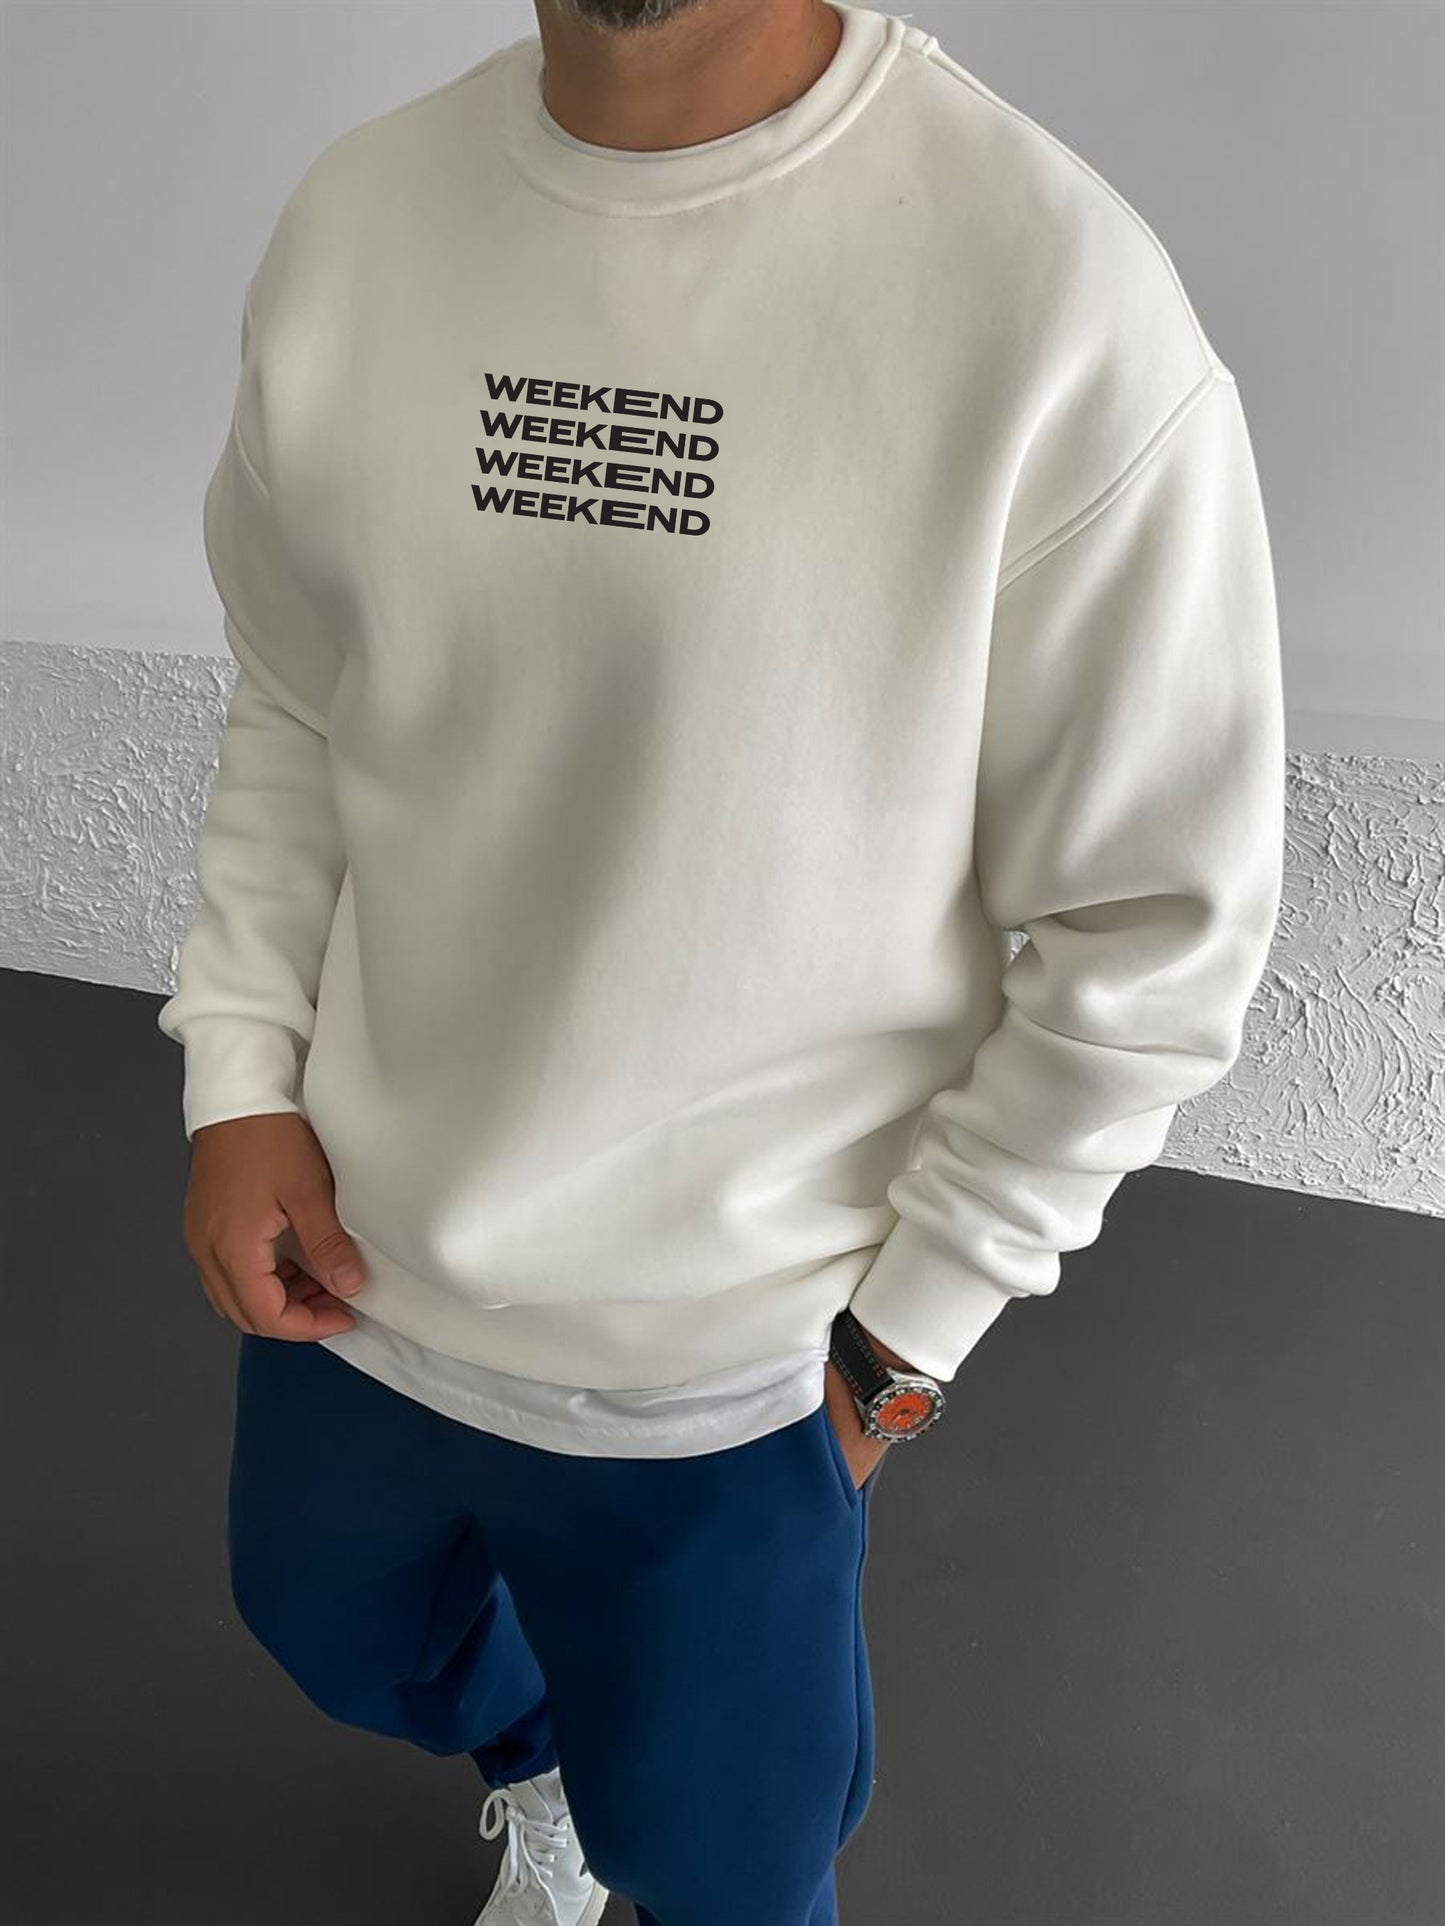 Off-White "Weekend" Printed Oversize Sweatshirt